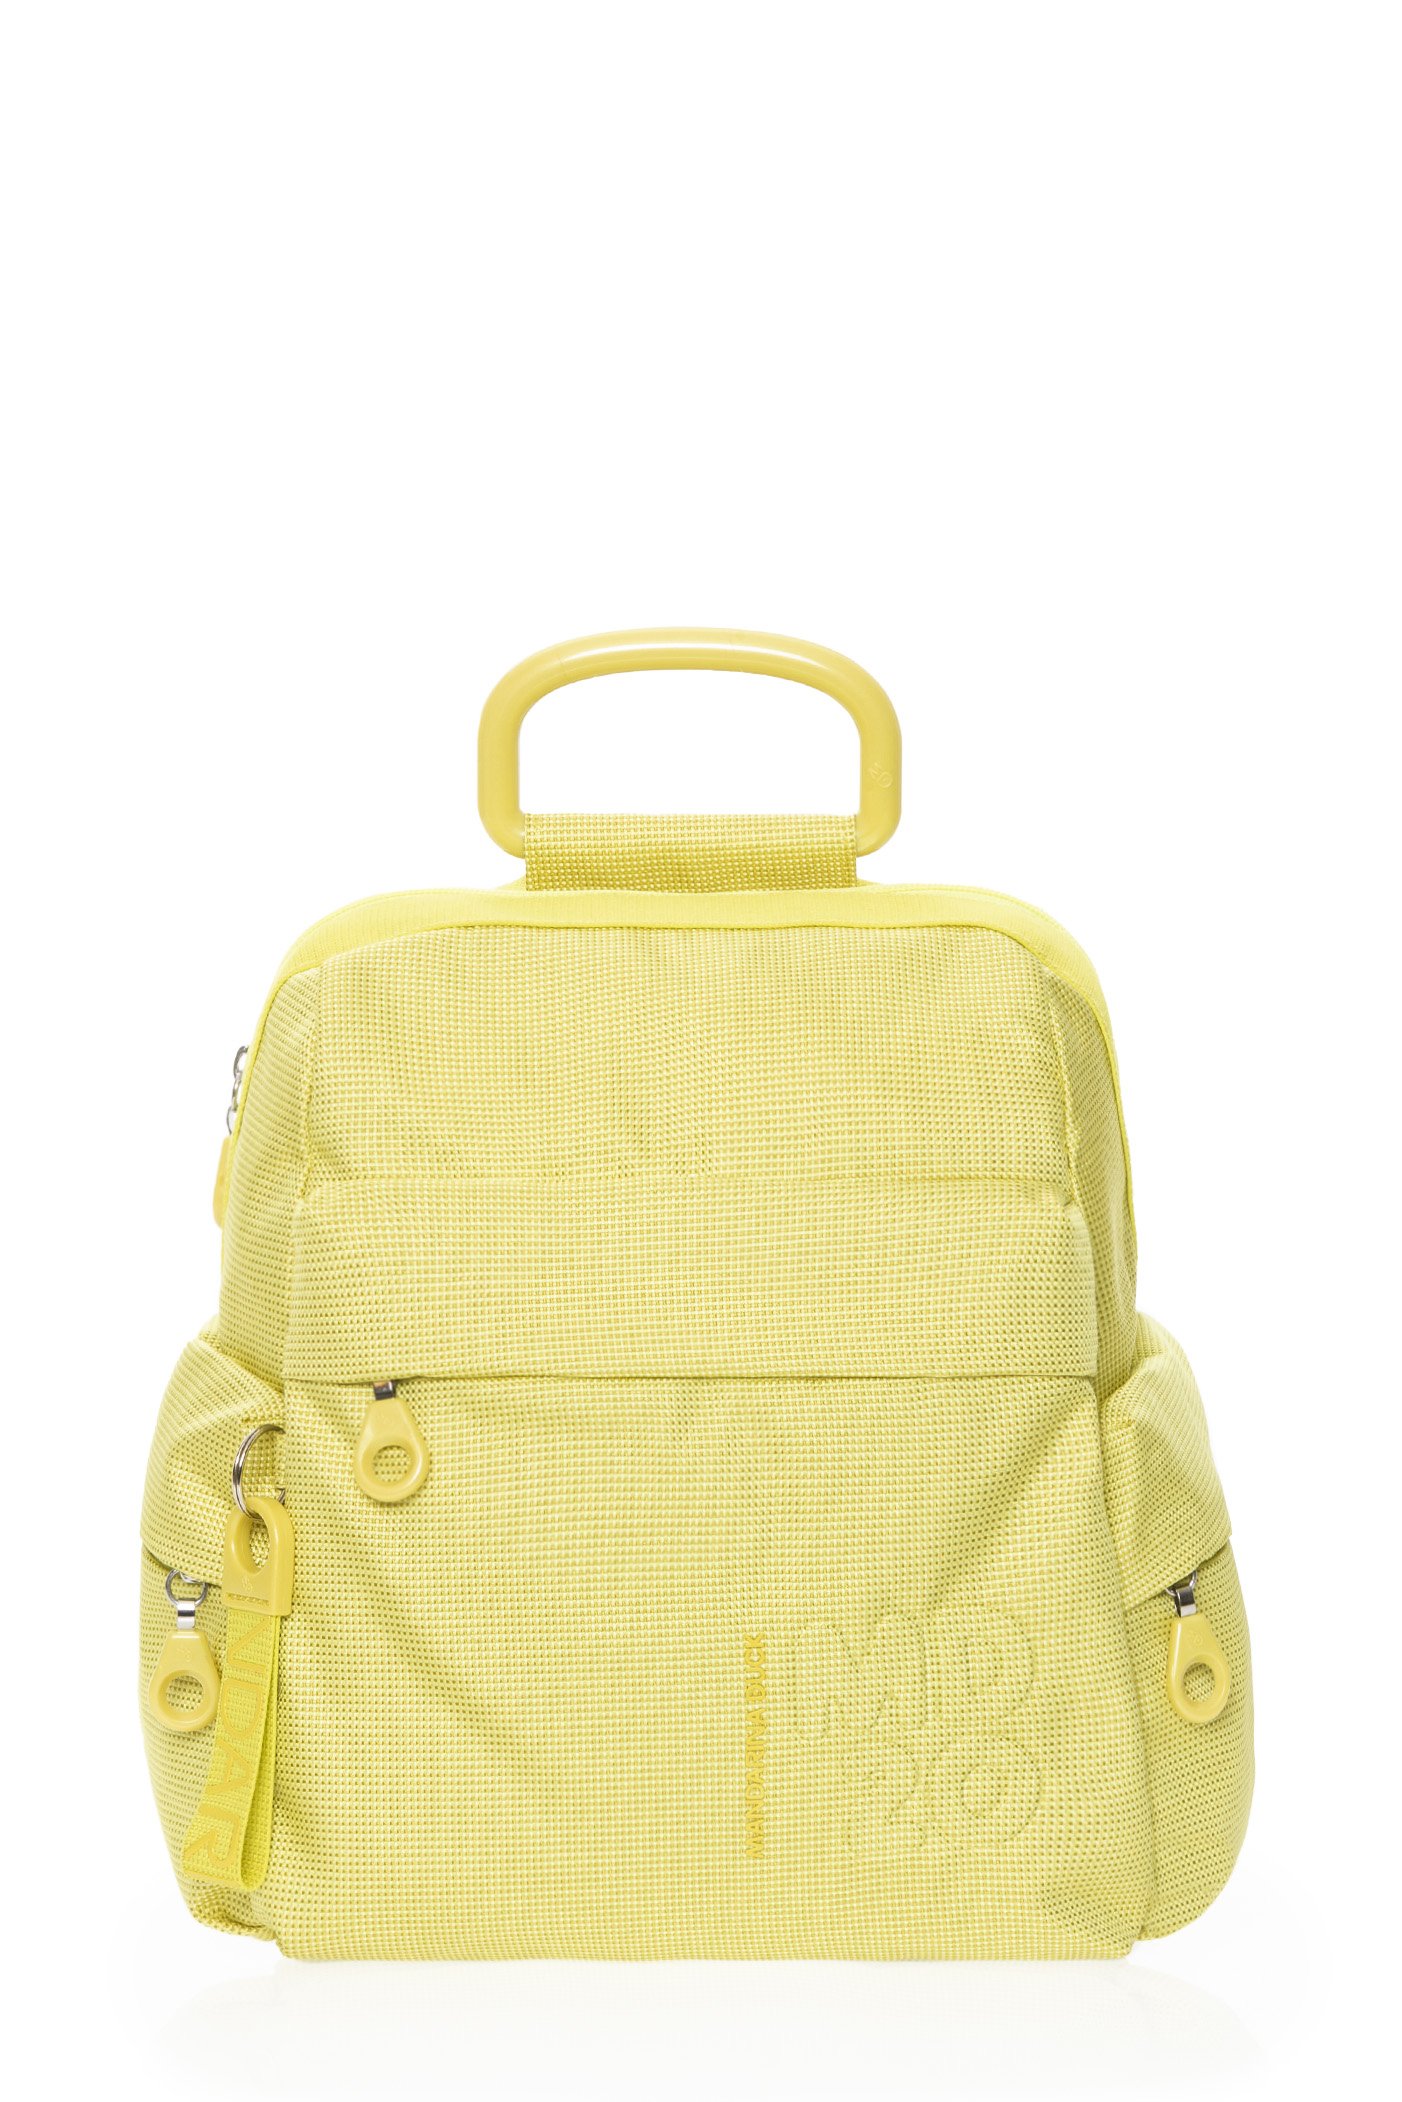 Bag design for Mandarina Duck – droog